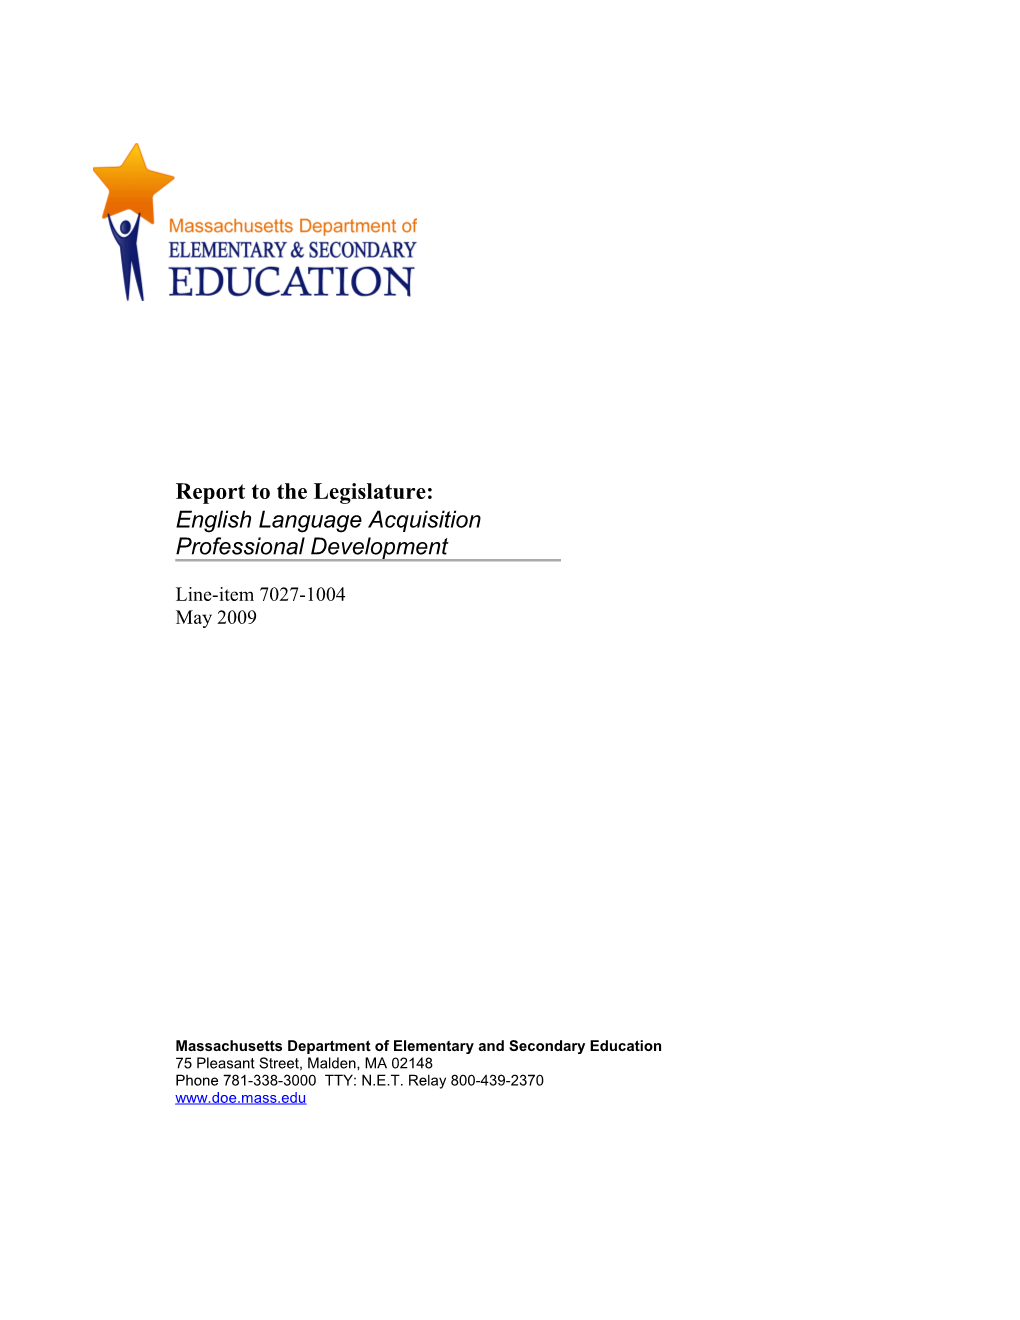 English Language Acquisition Professional Development: Report to the Legislature; May 2009